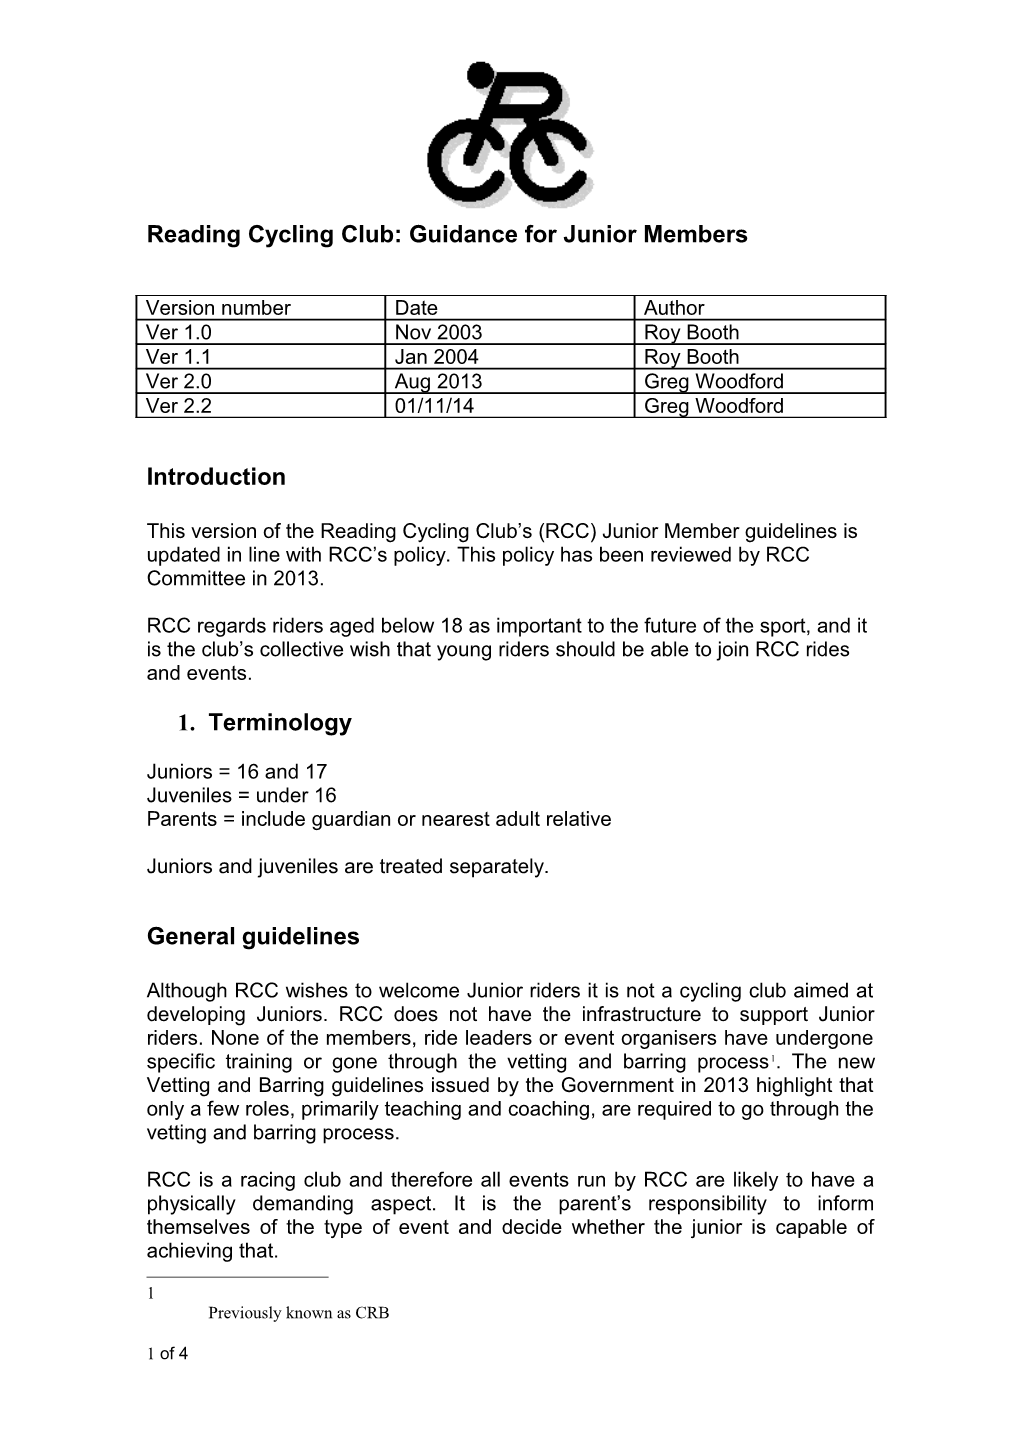 Reading Cycling Club: Junior Members